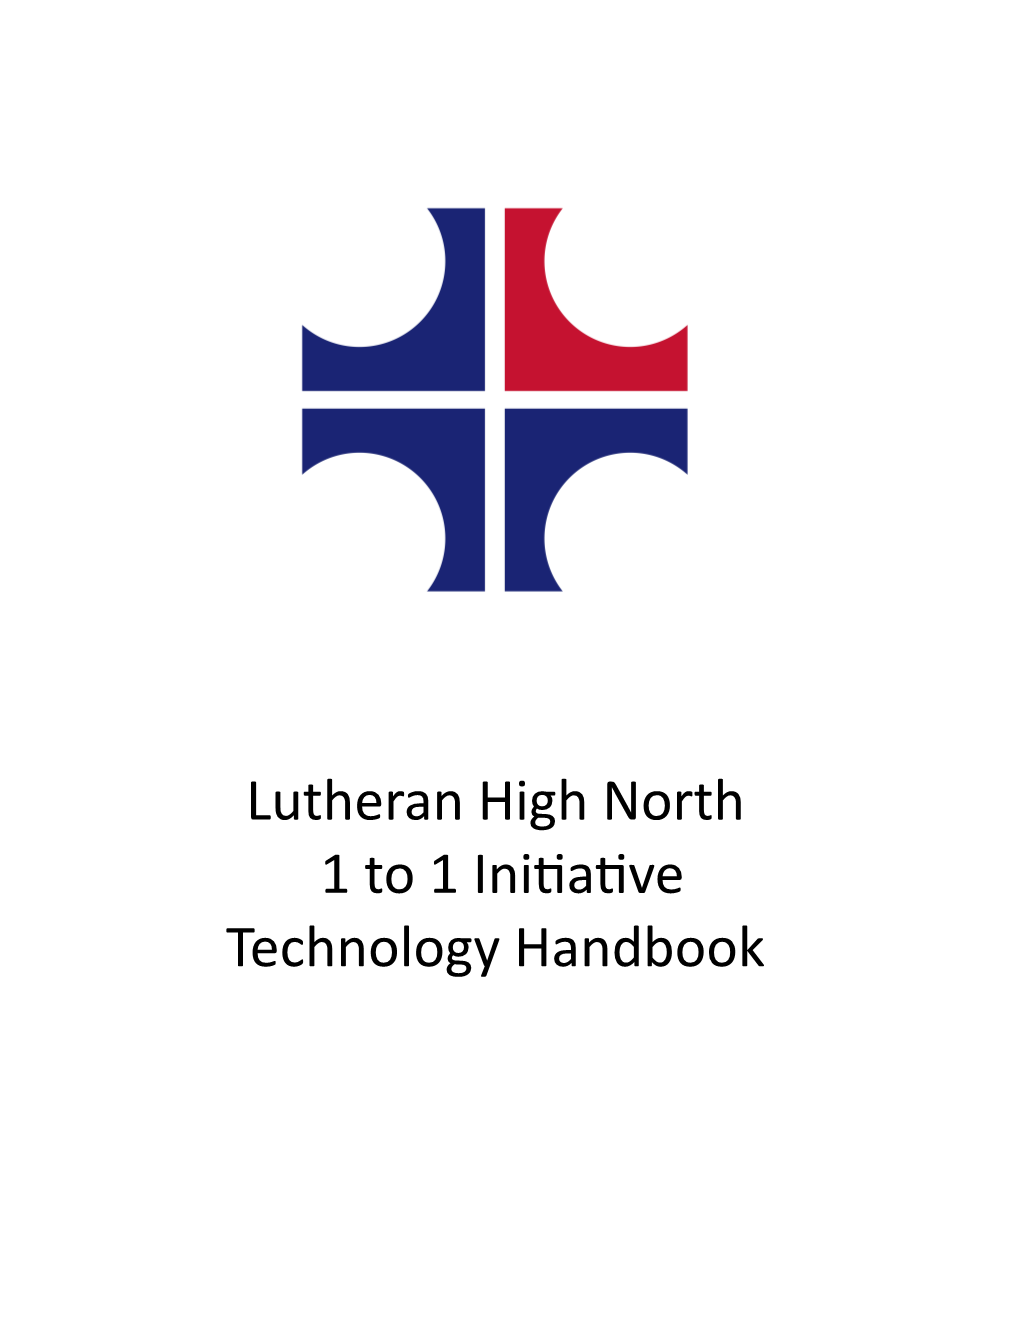 LHN Technology Handb 2014-2015.Pages